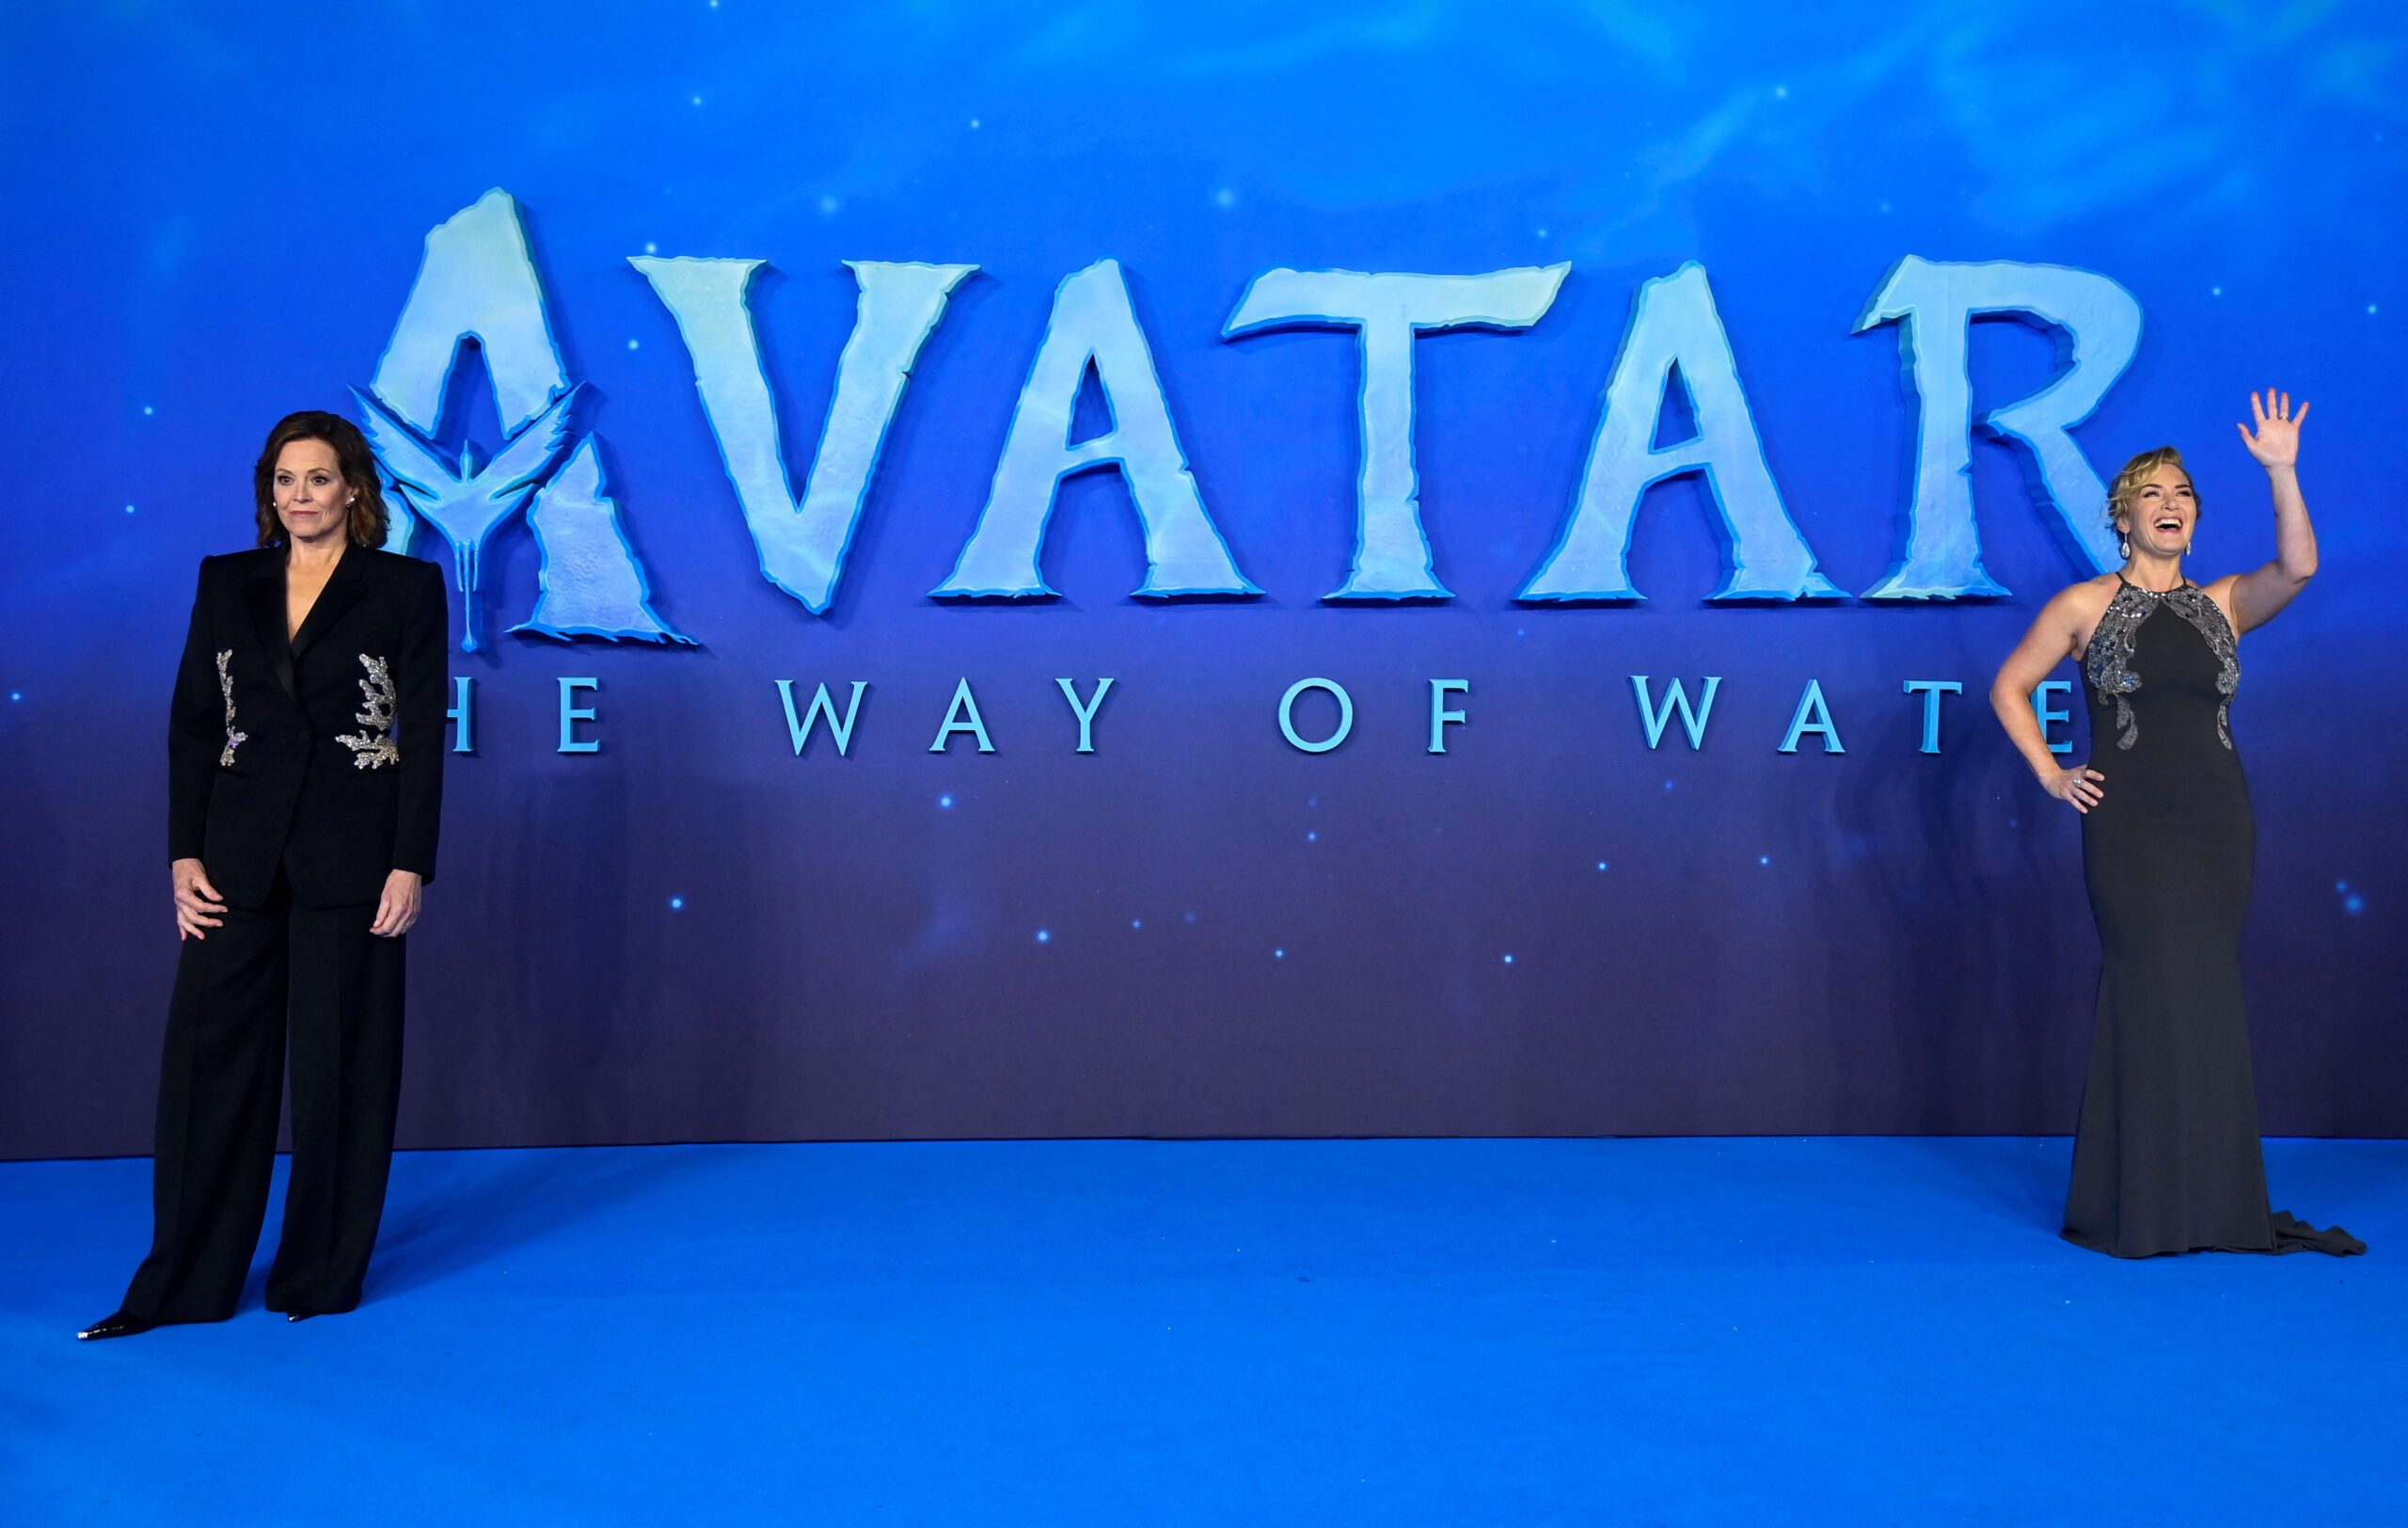 ‘Avatar’ sequel earns film critics’ praise for visual spectacle